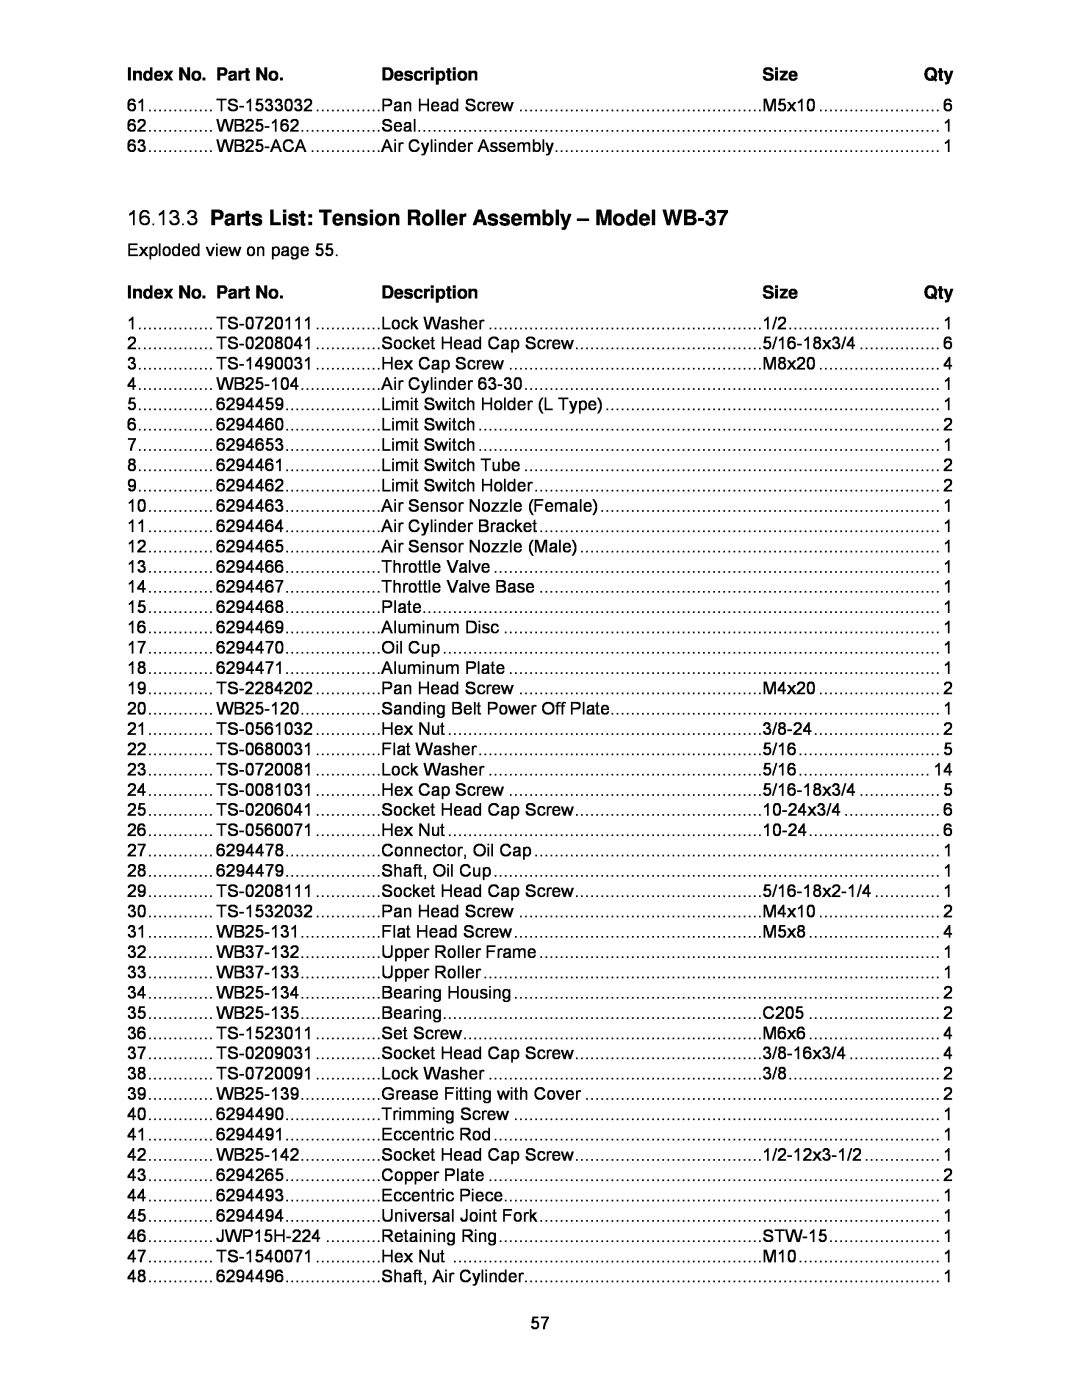 Powermatic WB-25, WB-43 Parts List Tension Roller Assembly - Model WB-37, Index No. Part No, Description, Size 